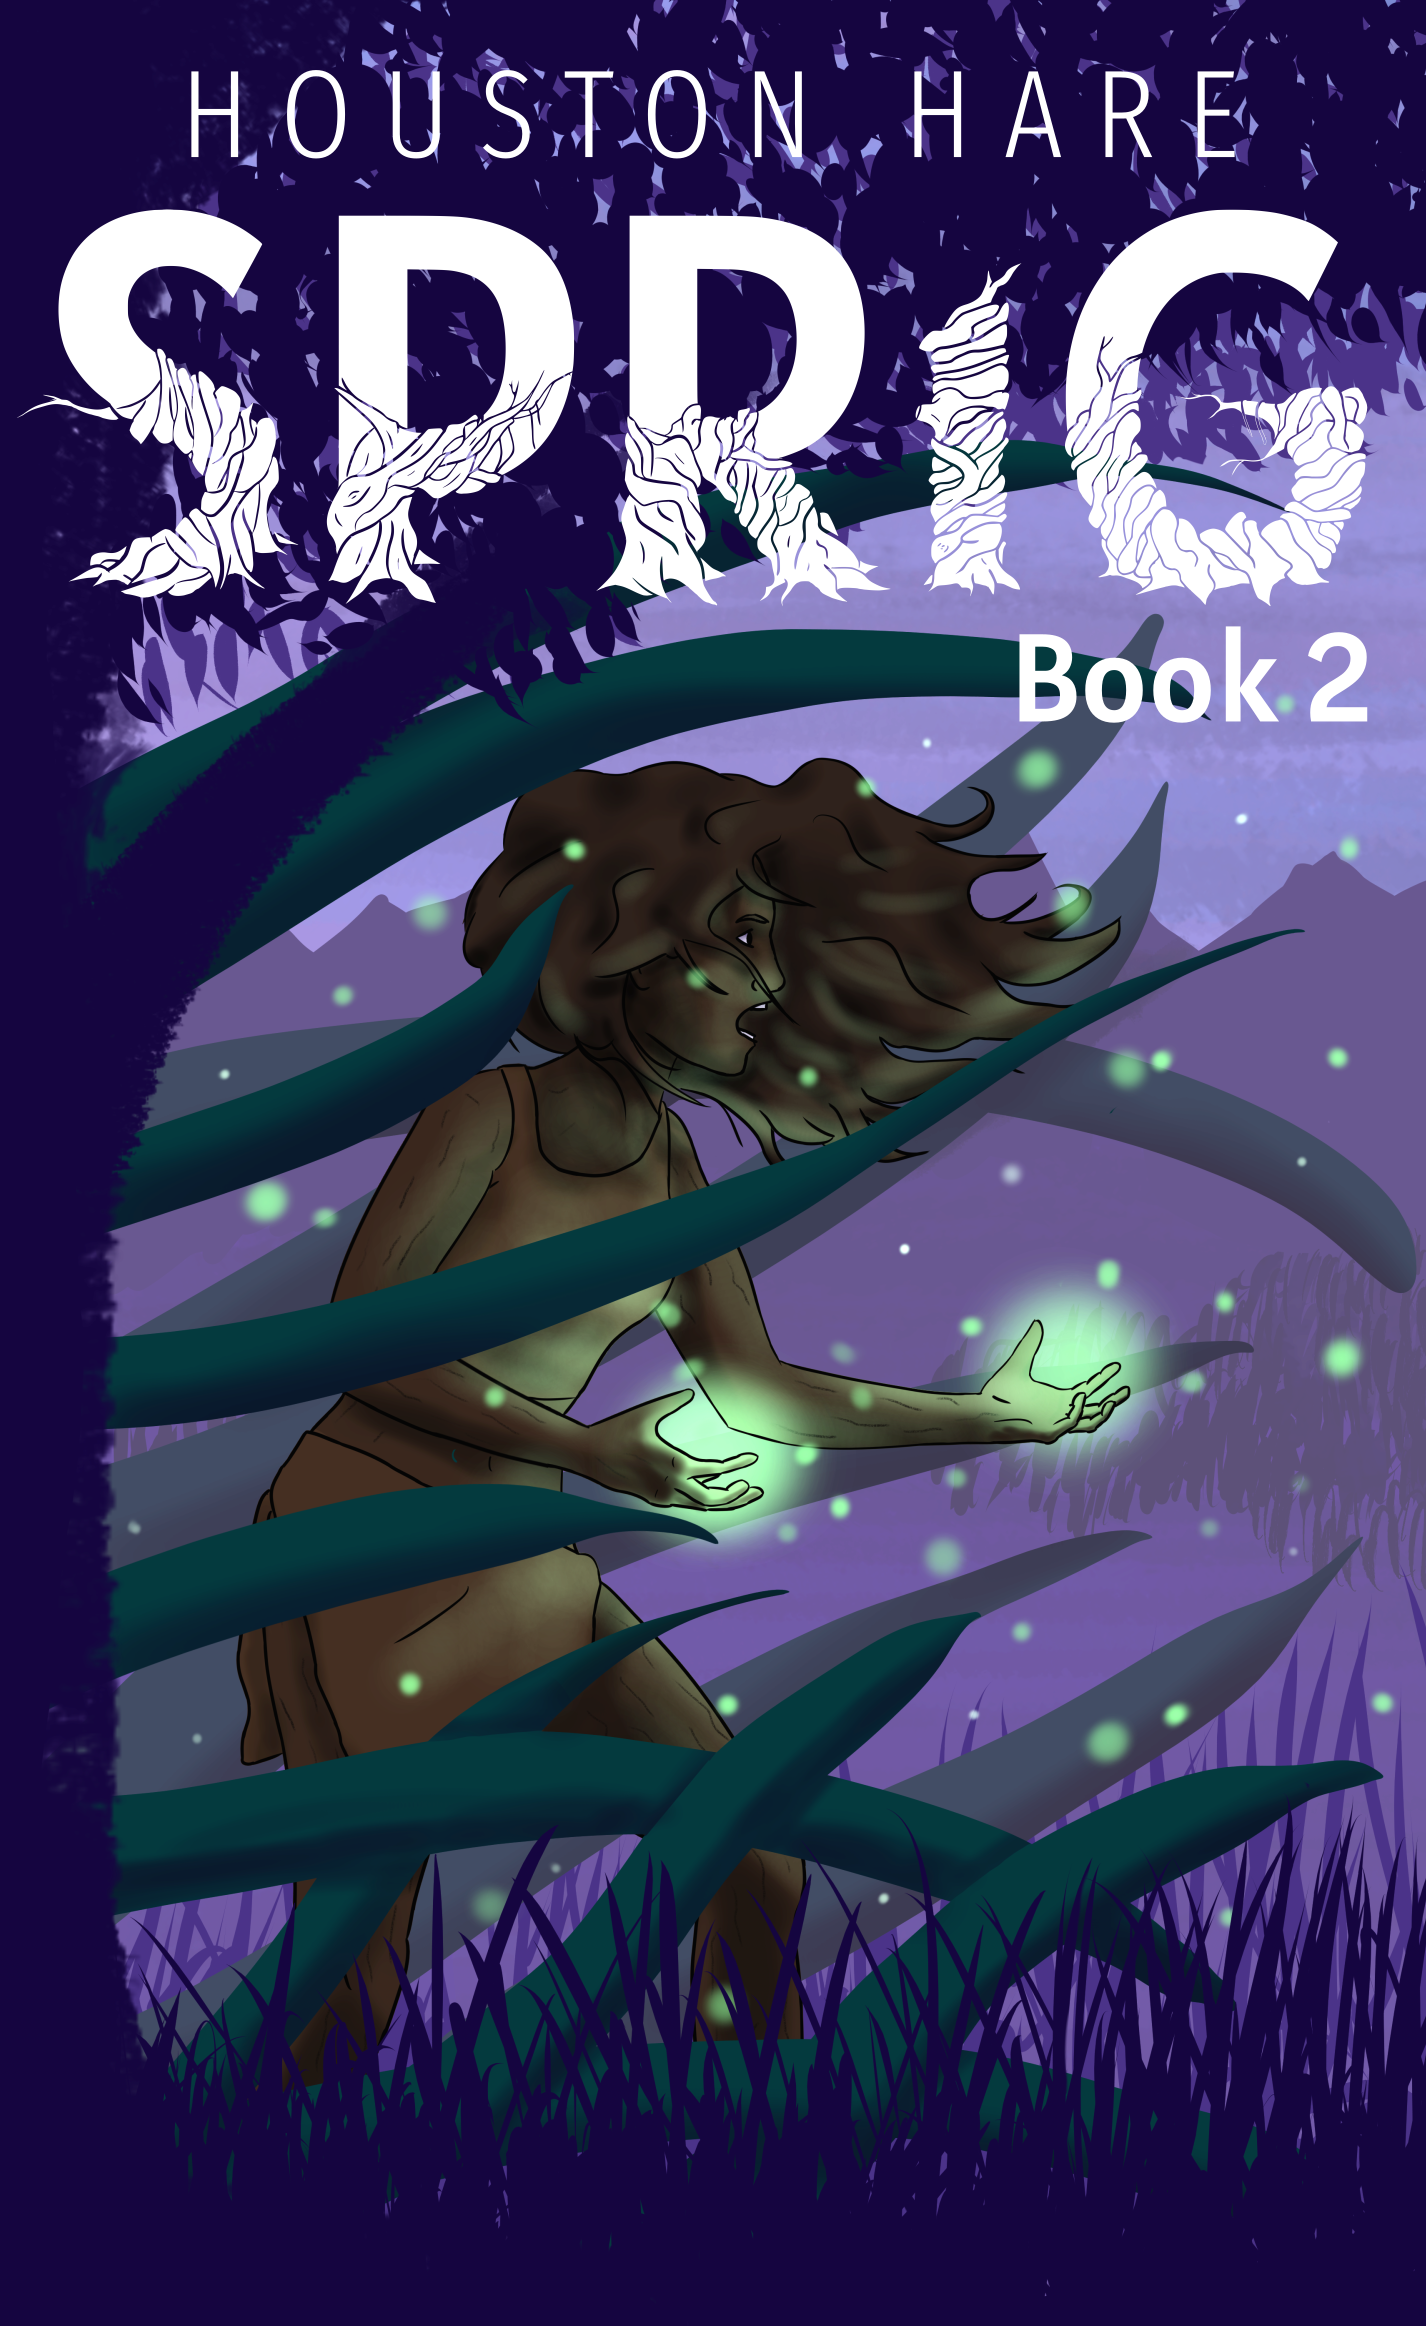 Sprig (Book #2) - Book Release!